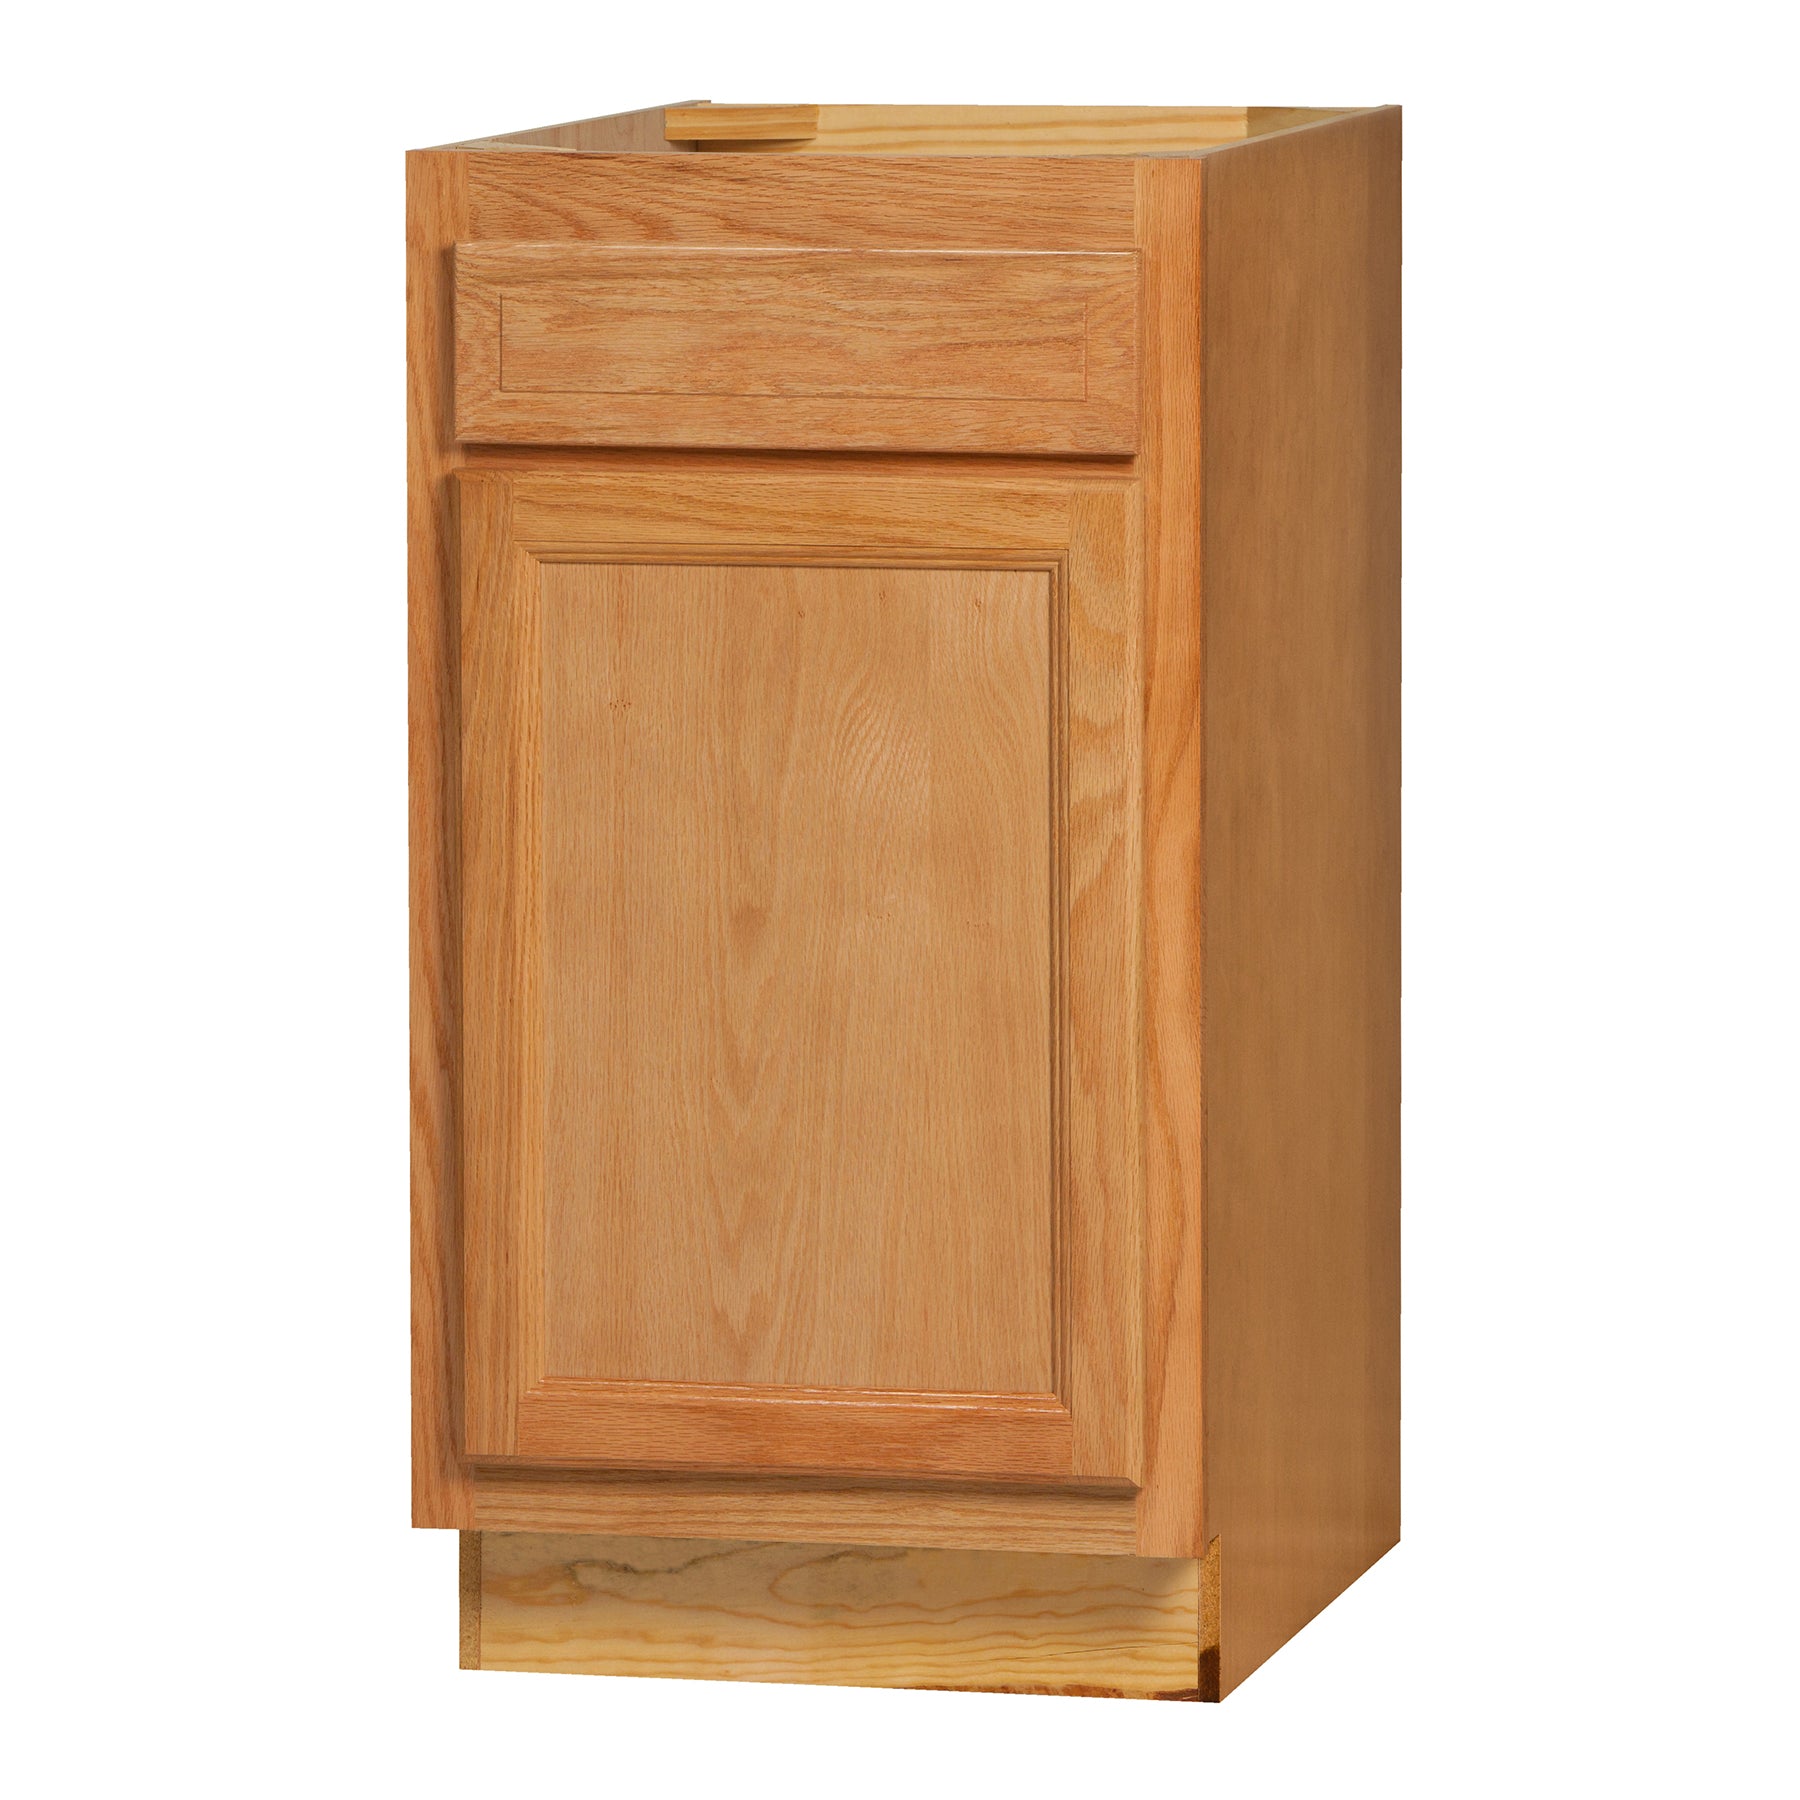 18 Inch Base Cabinets - Chadwood Shaker - 18 Inch W x 24 Inch D x 34.5 Inch H